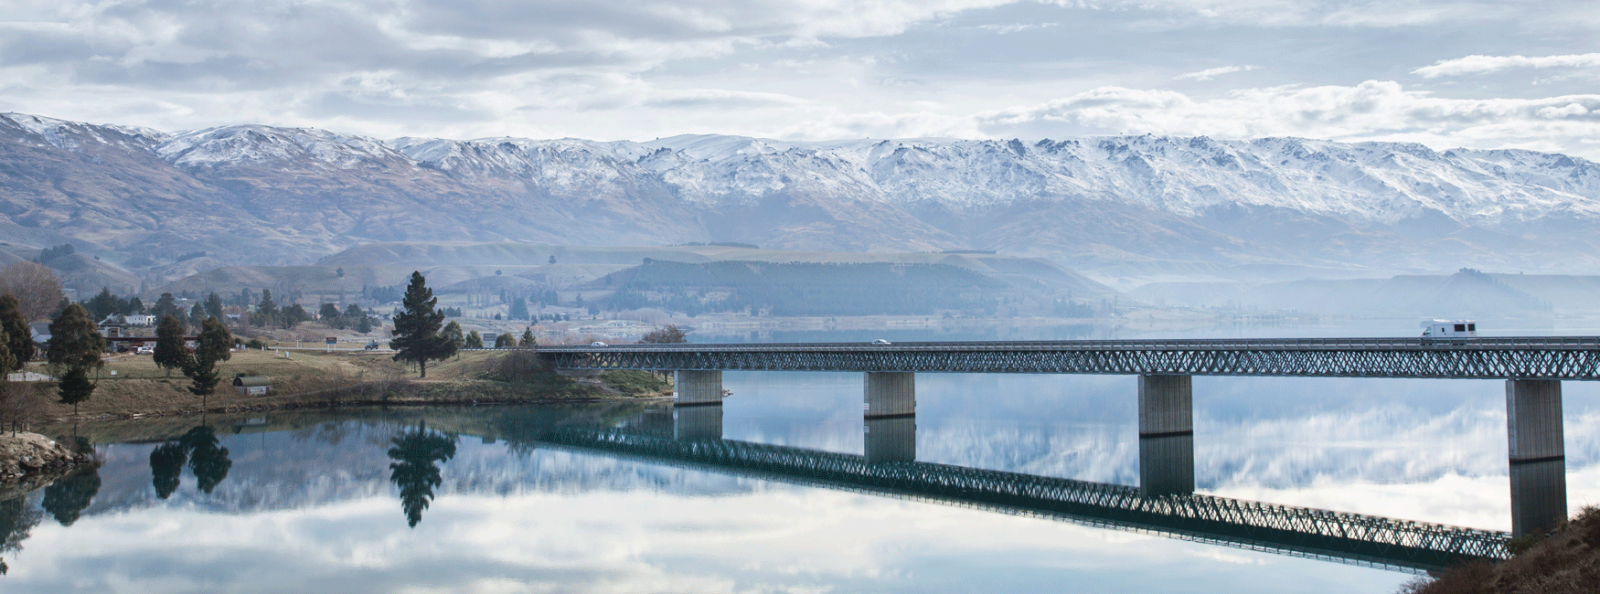 Bridge New Zealand